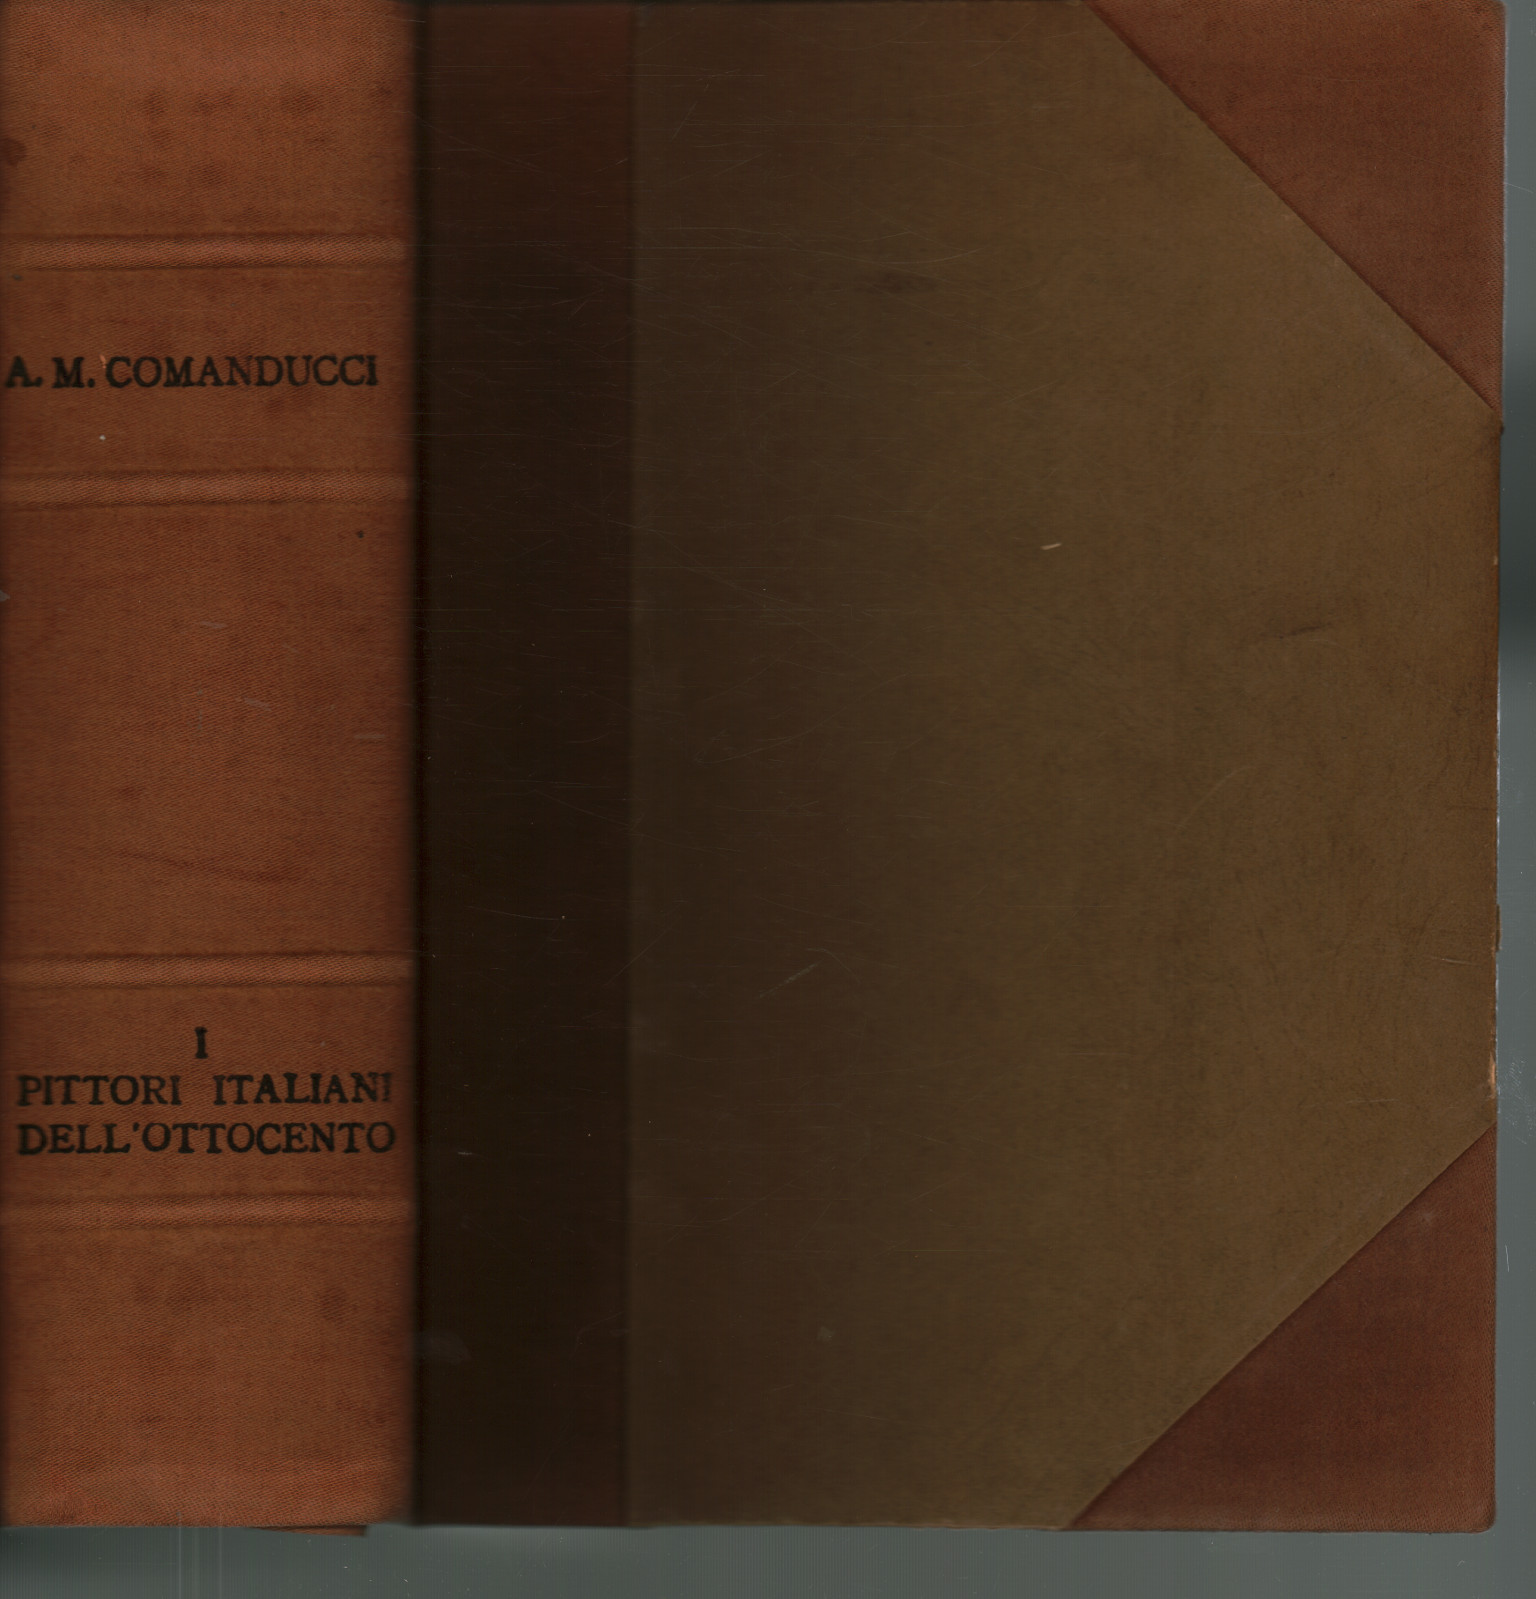 The Italian painters of the Nineteenth century. Dictionary crit, A. M. Comanducci